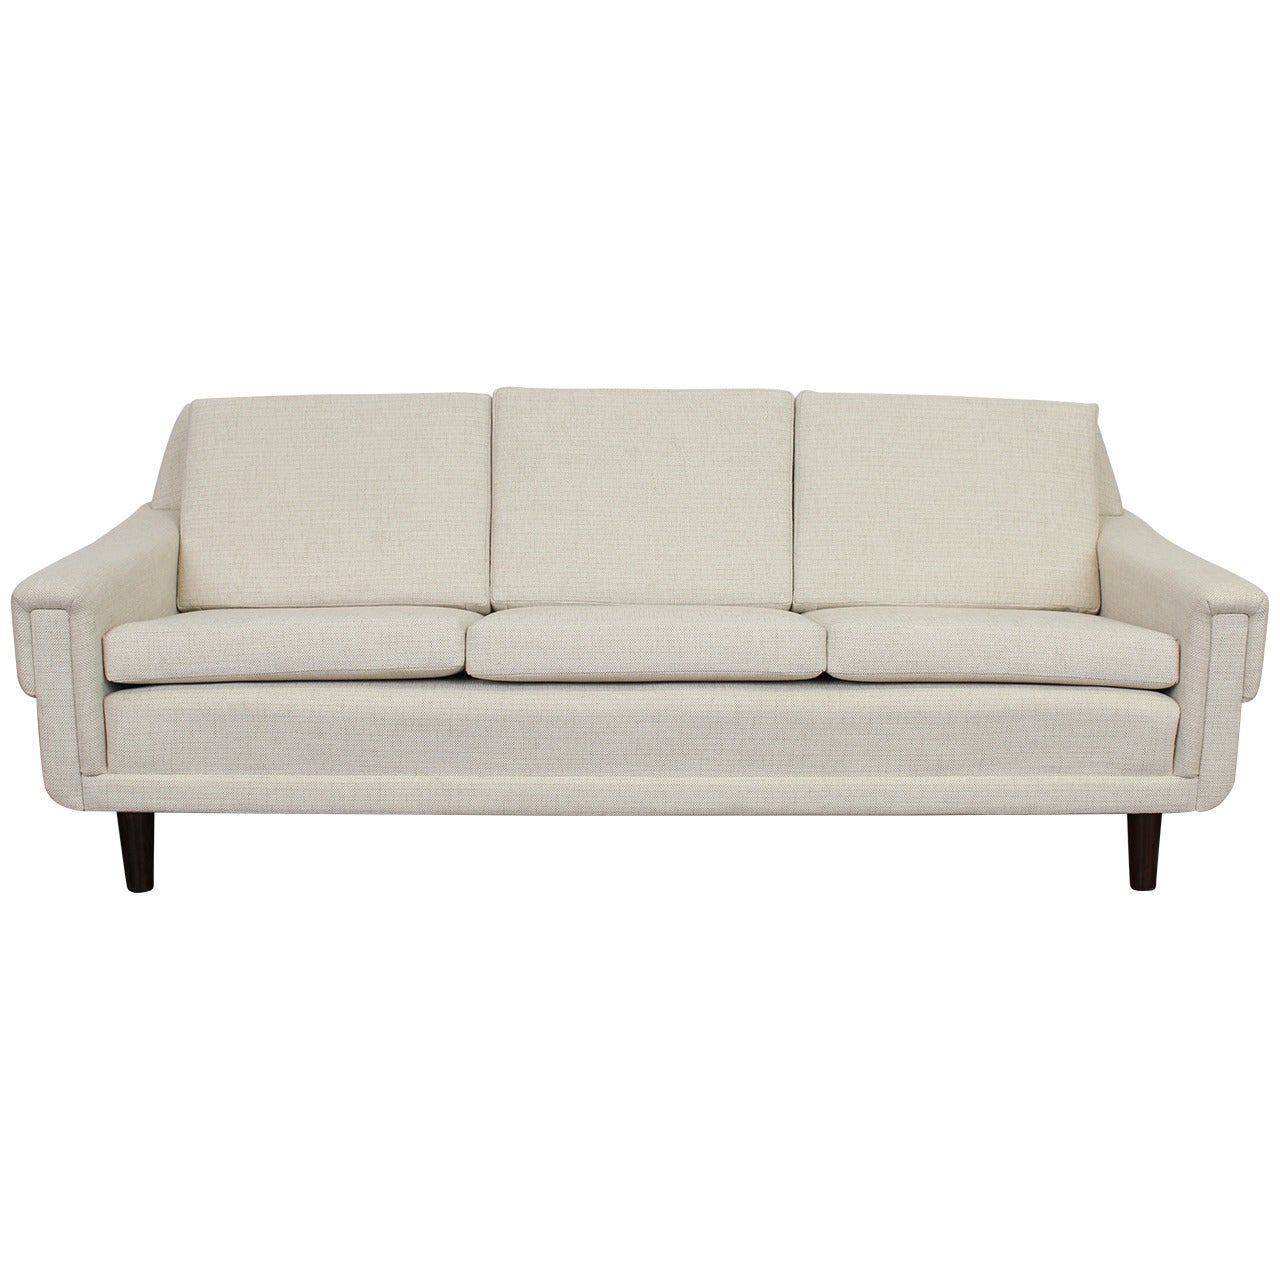 Off-White Danish Three-Seat Sofa with Rosewood Legs